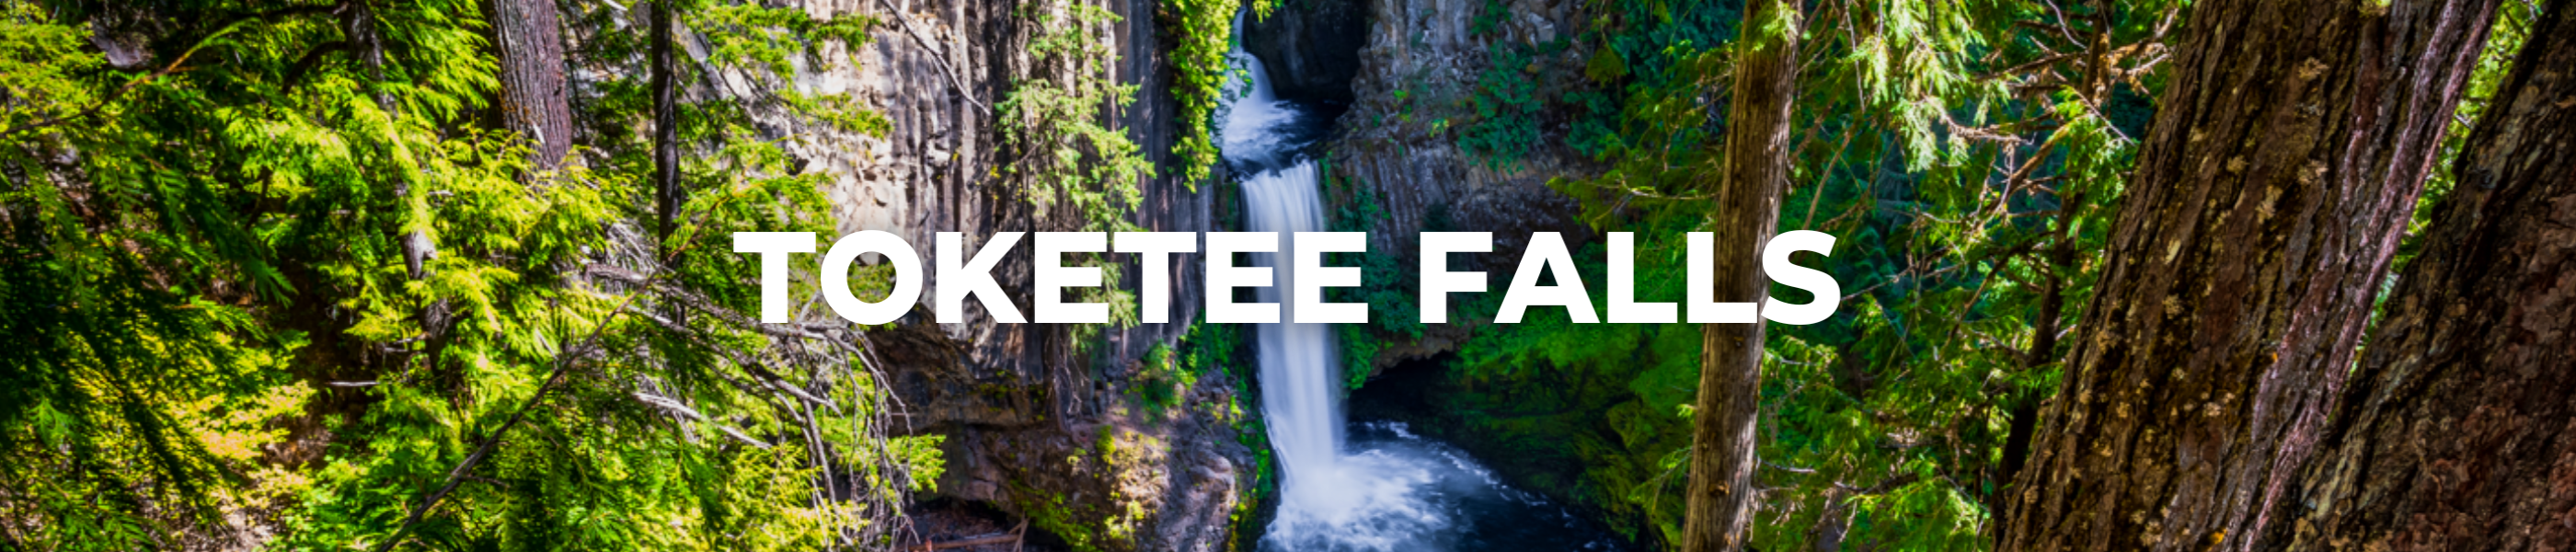 toketee falls, waterfalls, medford hiking and biking, southern oregon hikes